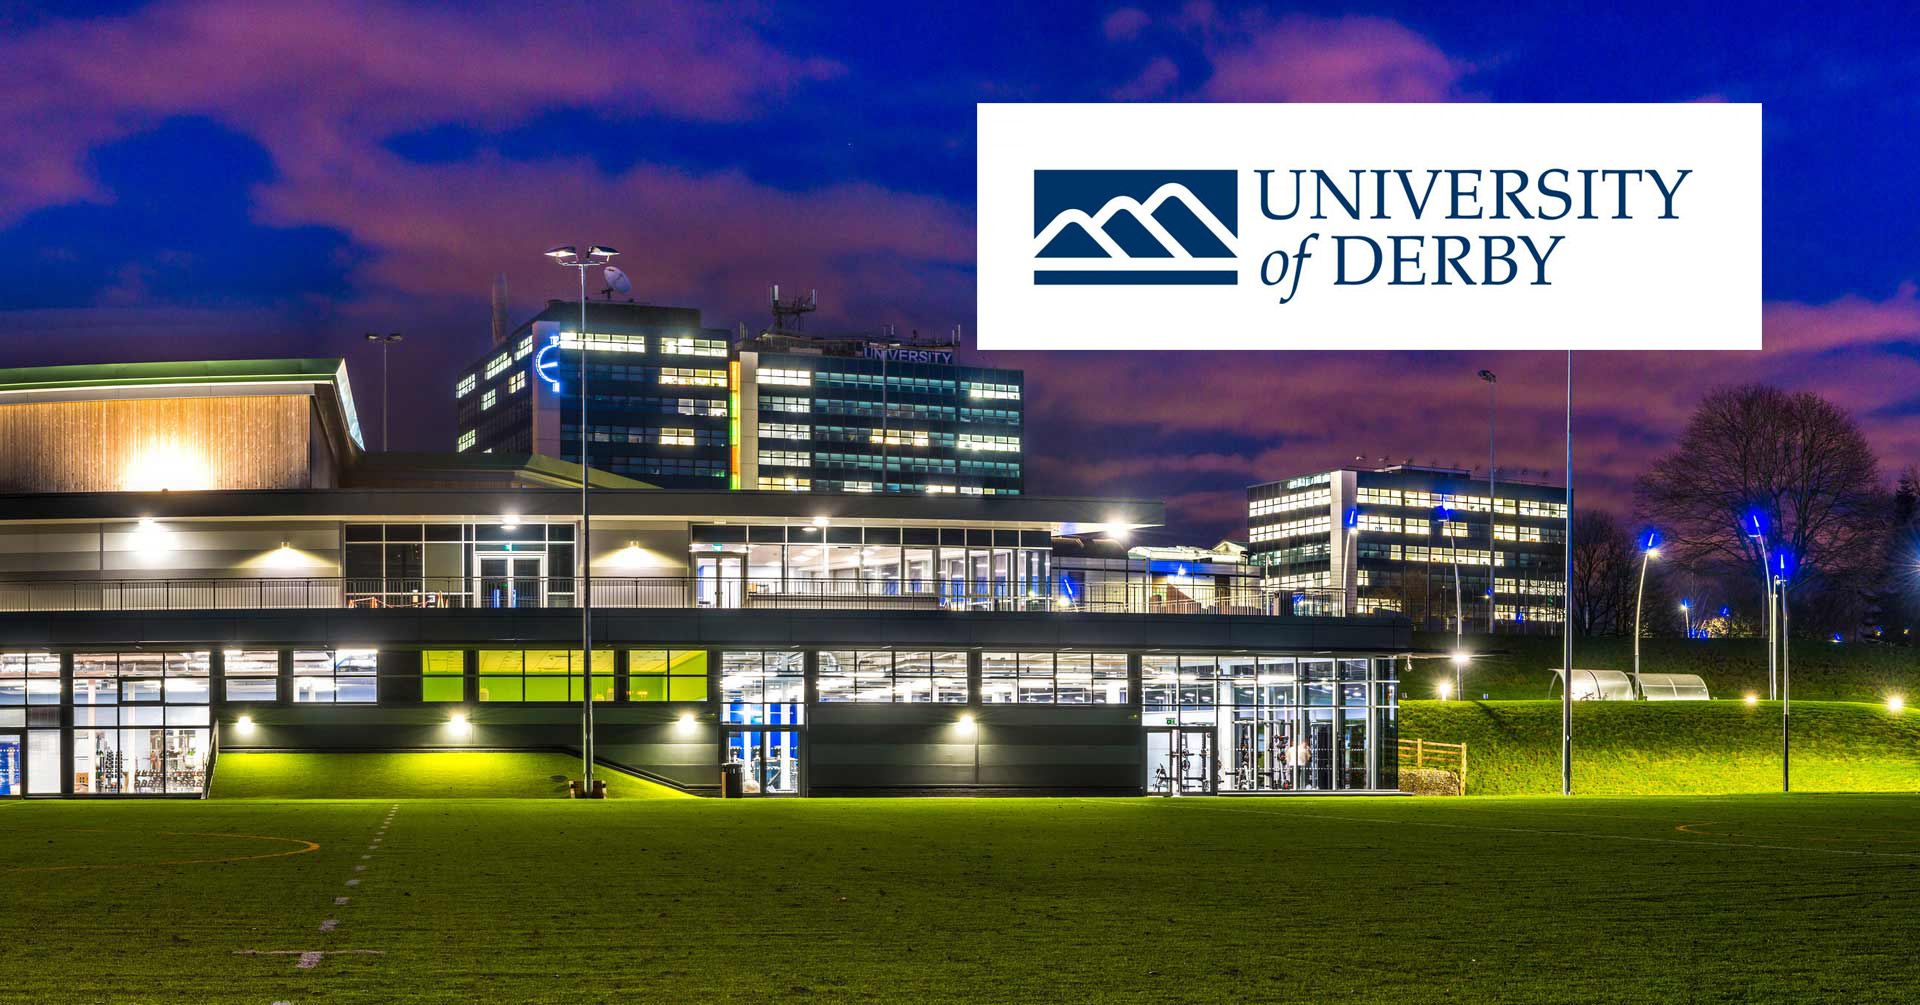 * University of Derby IStudentz